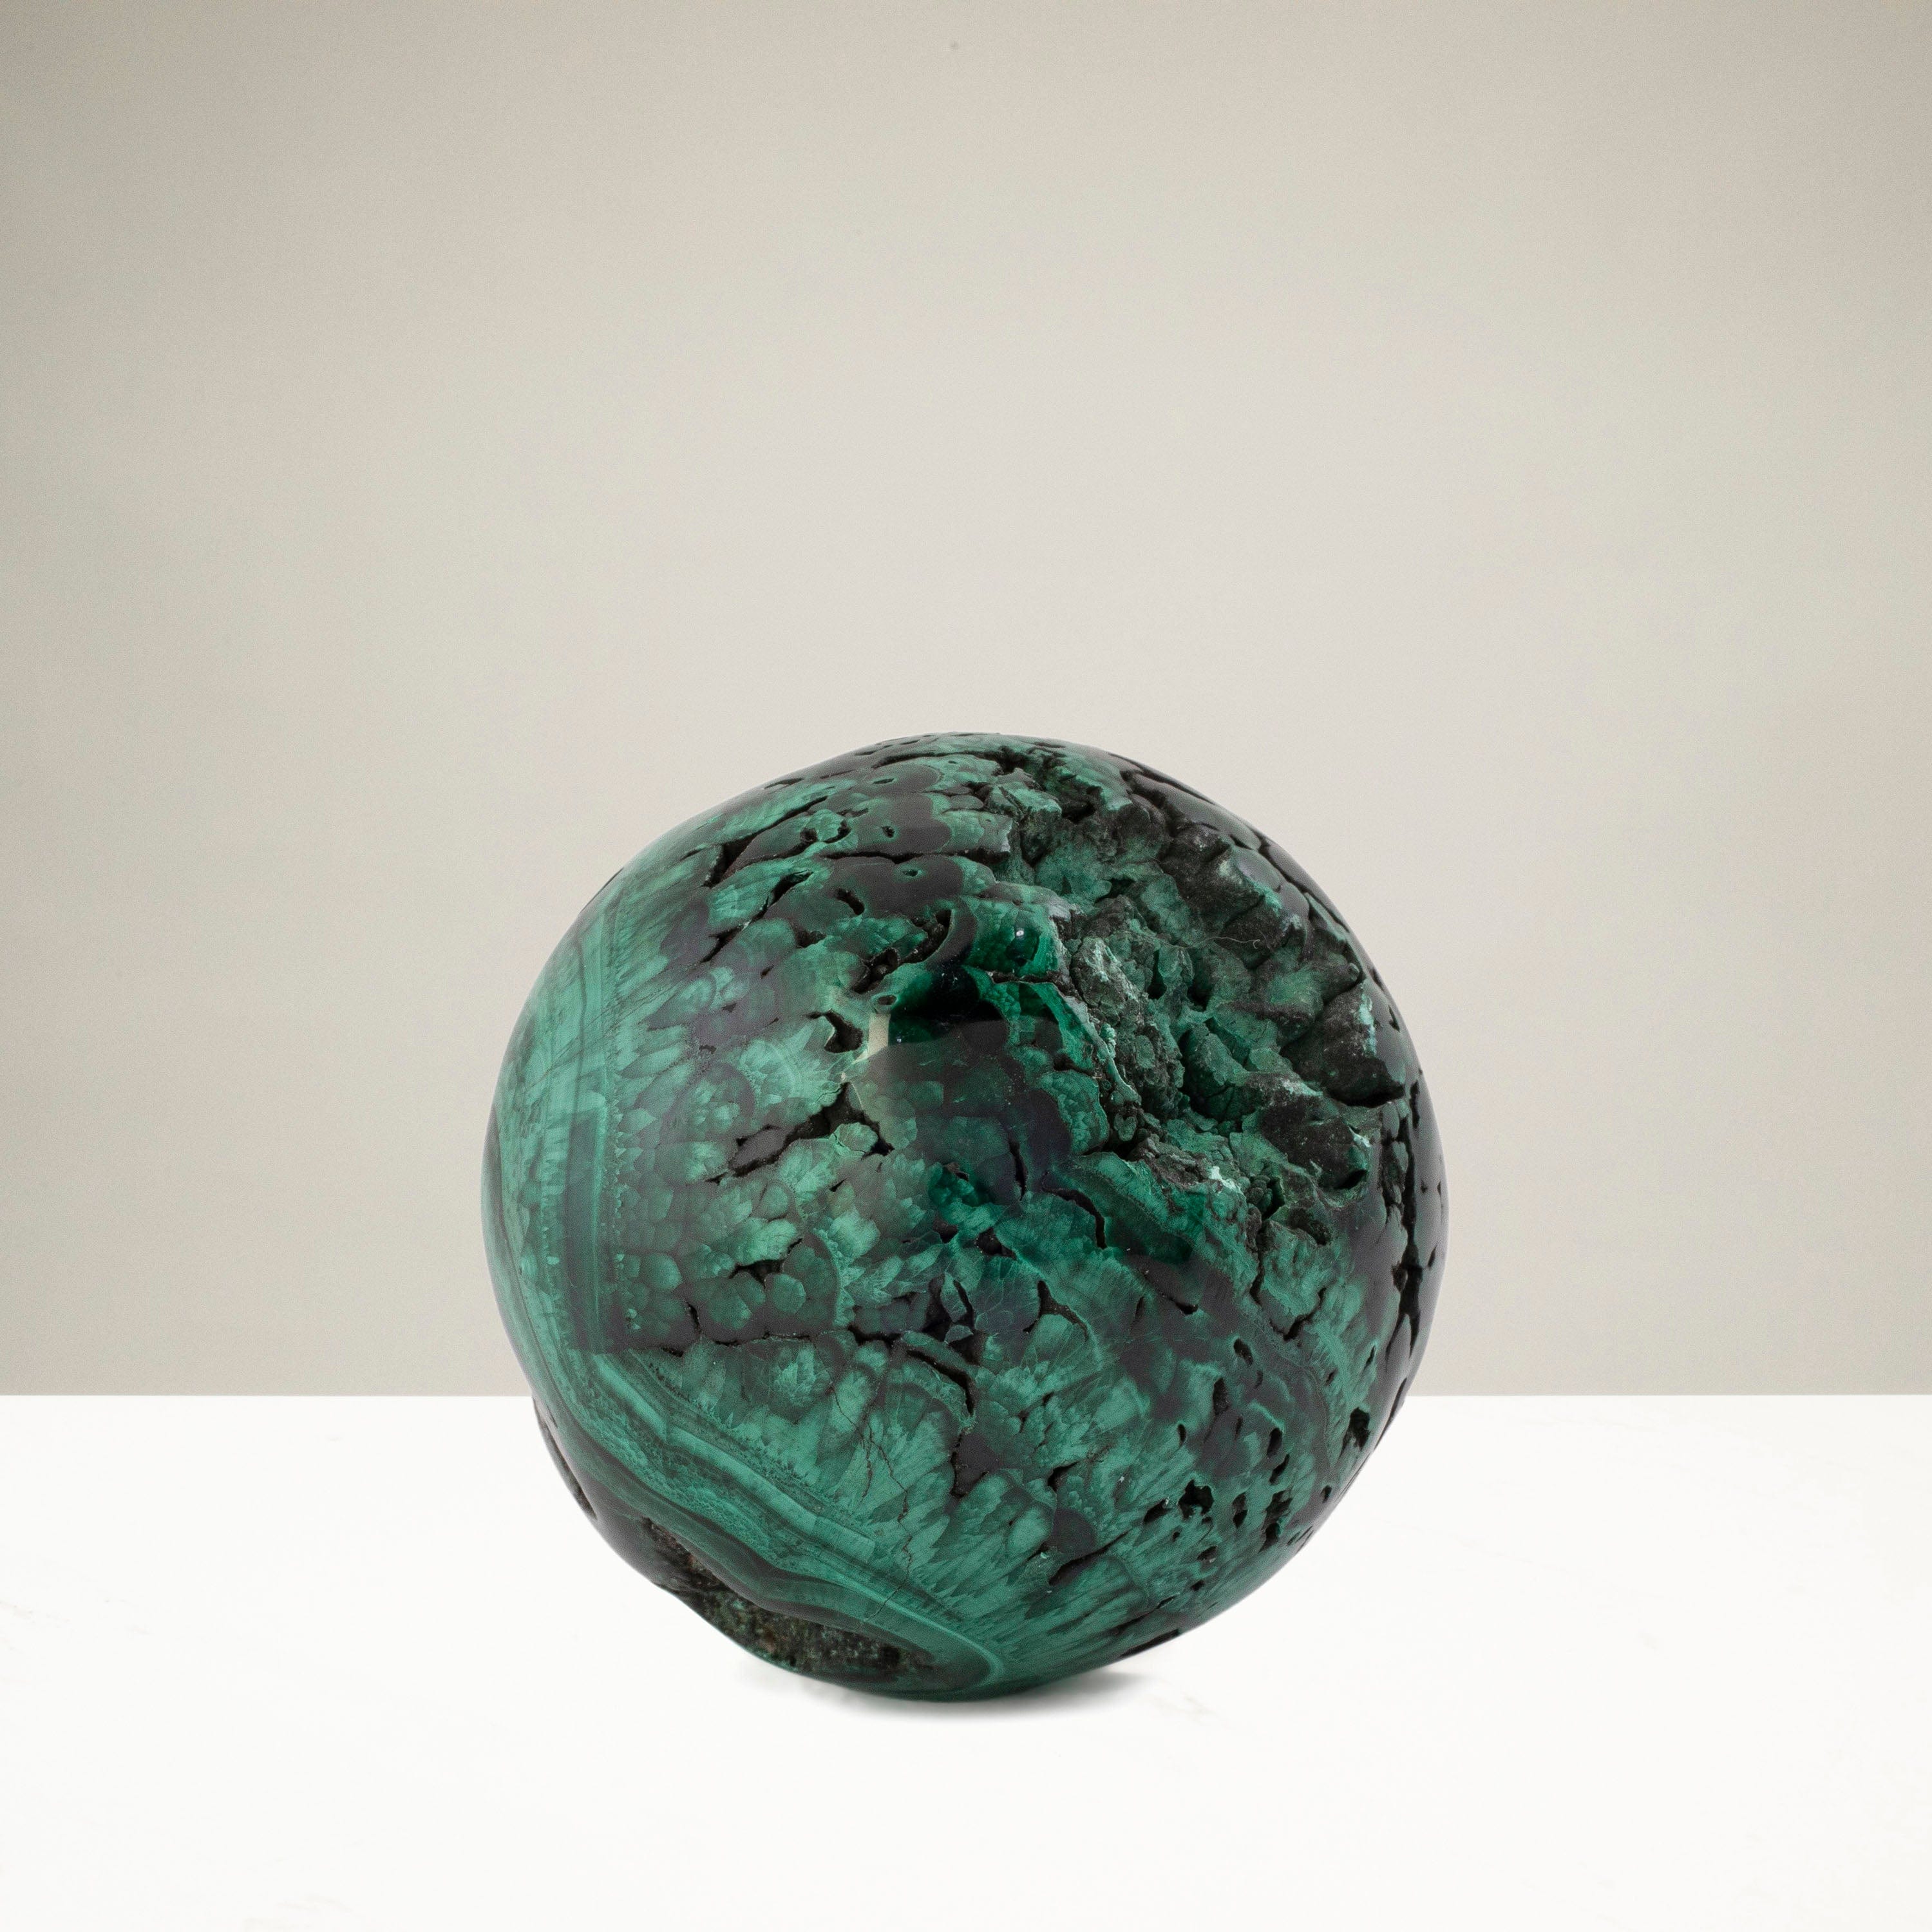 Kalifano Malachite Natural Malachite Sphere Carving From Congo - 2" / 125g MAS400